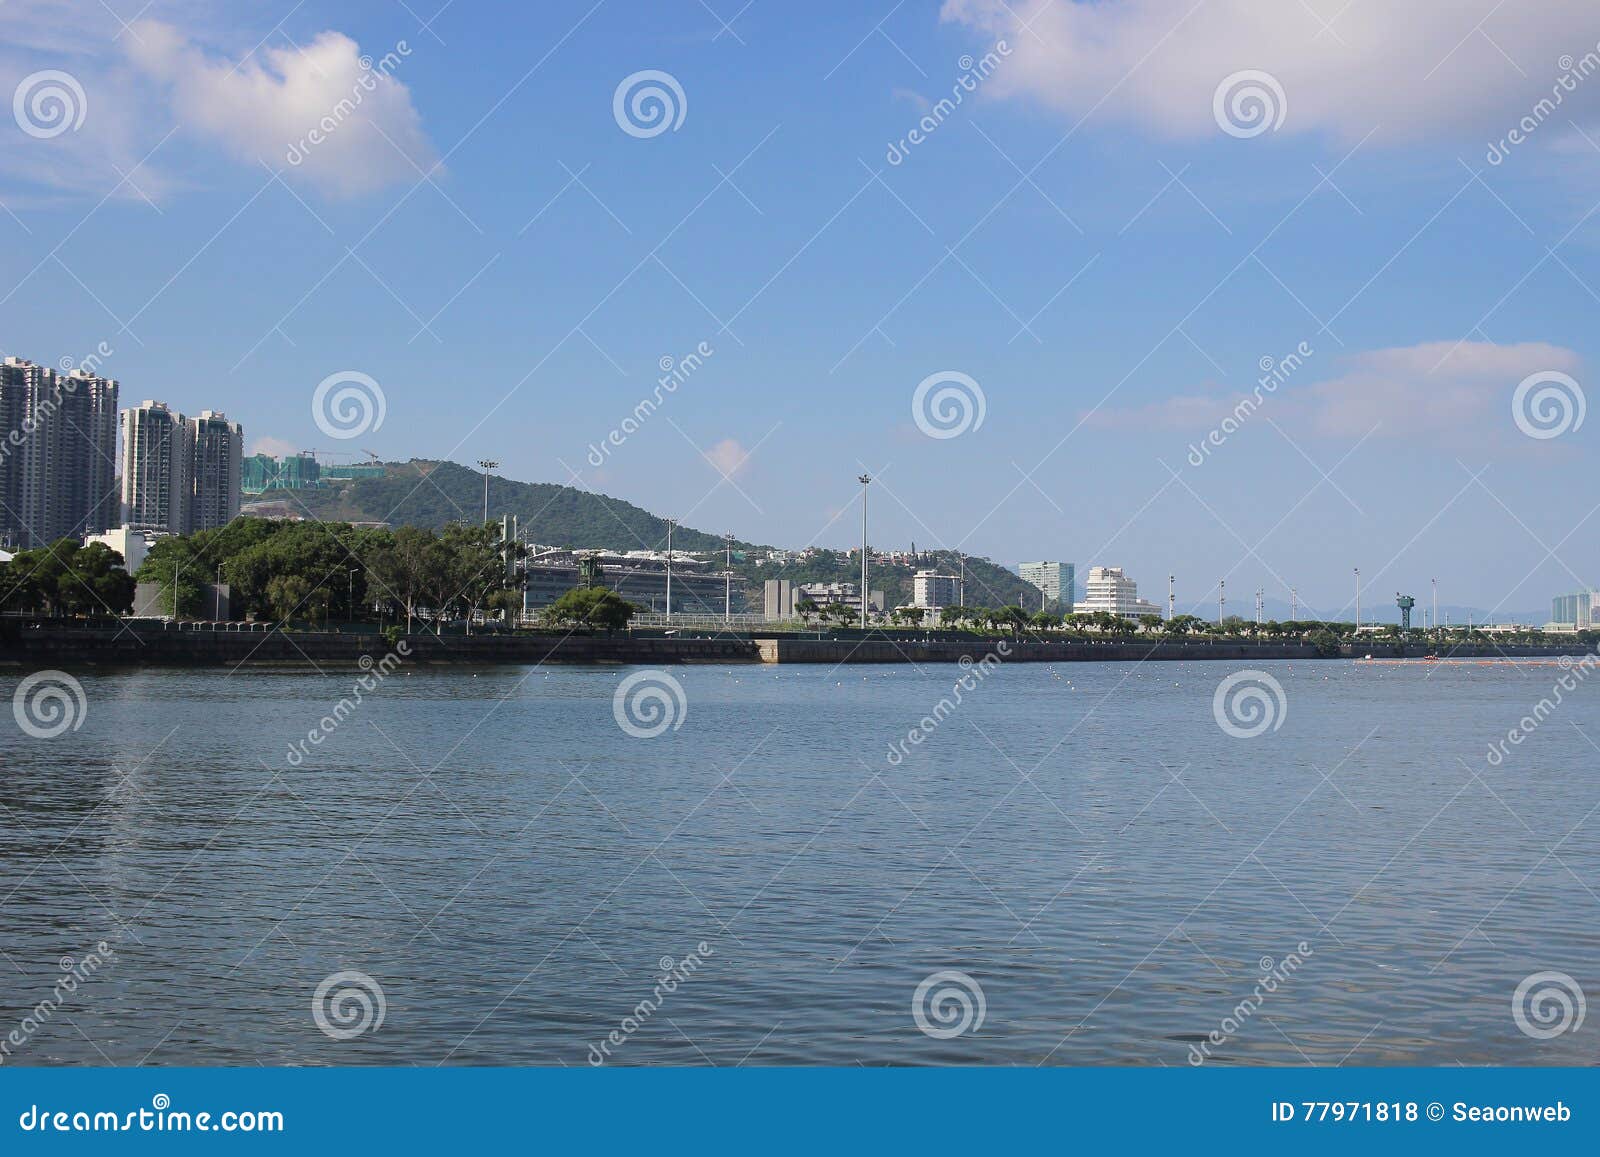 Shing Mun River En Shatin Foto De Archivo Imagen De Districto 77971818